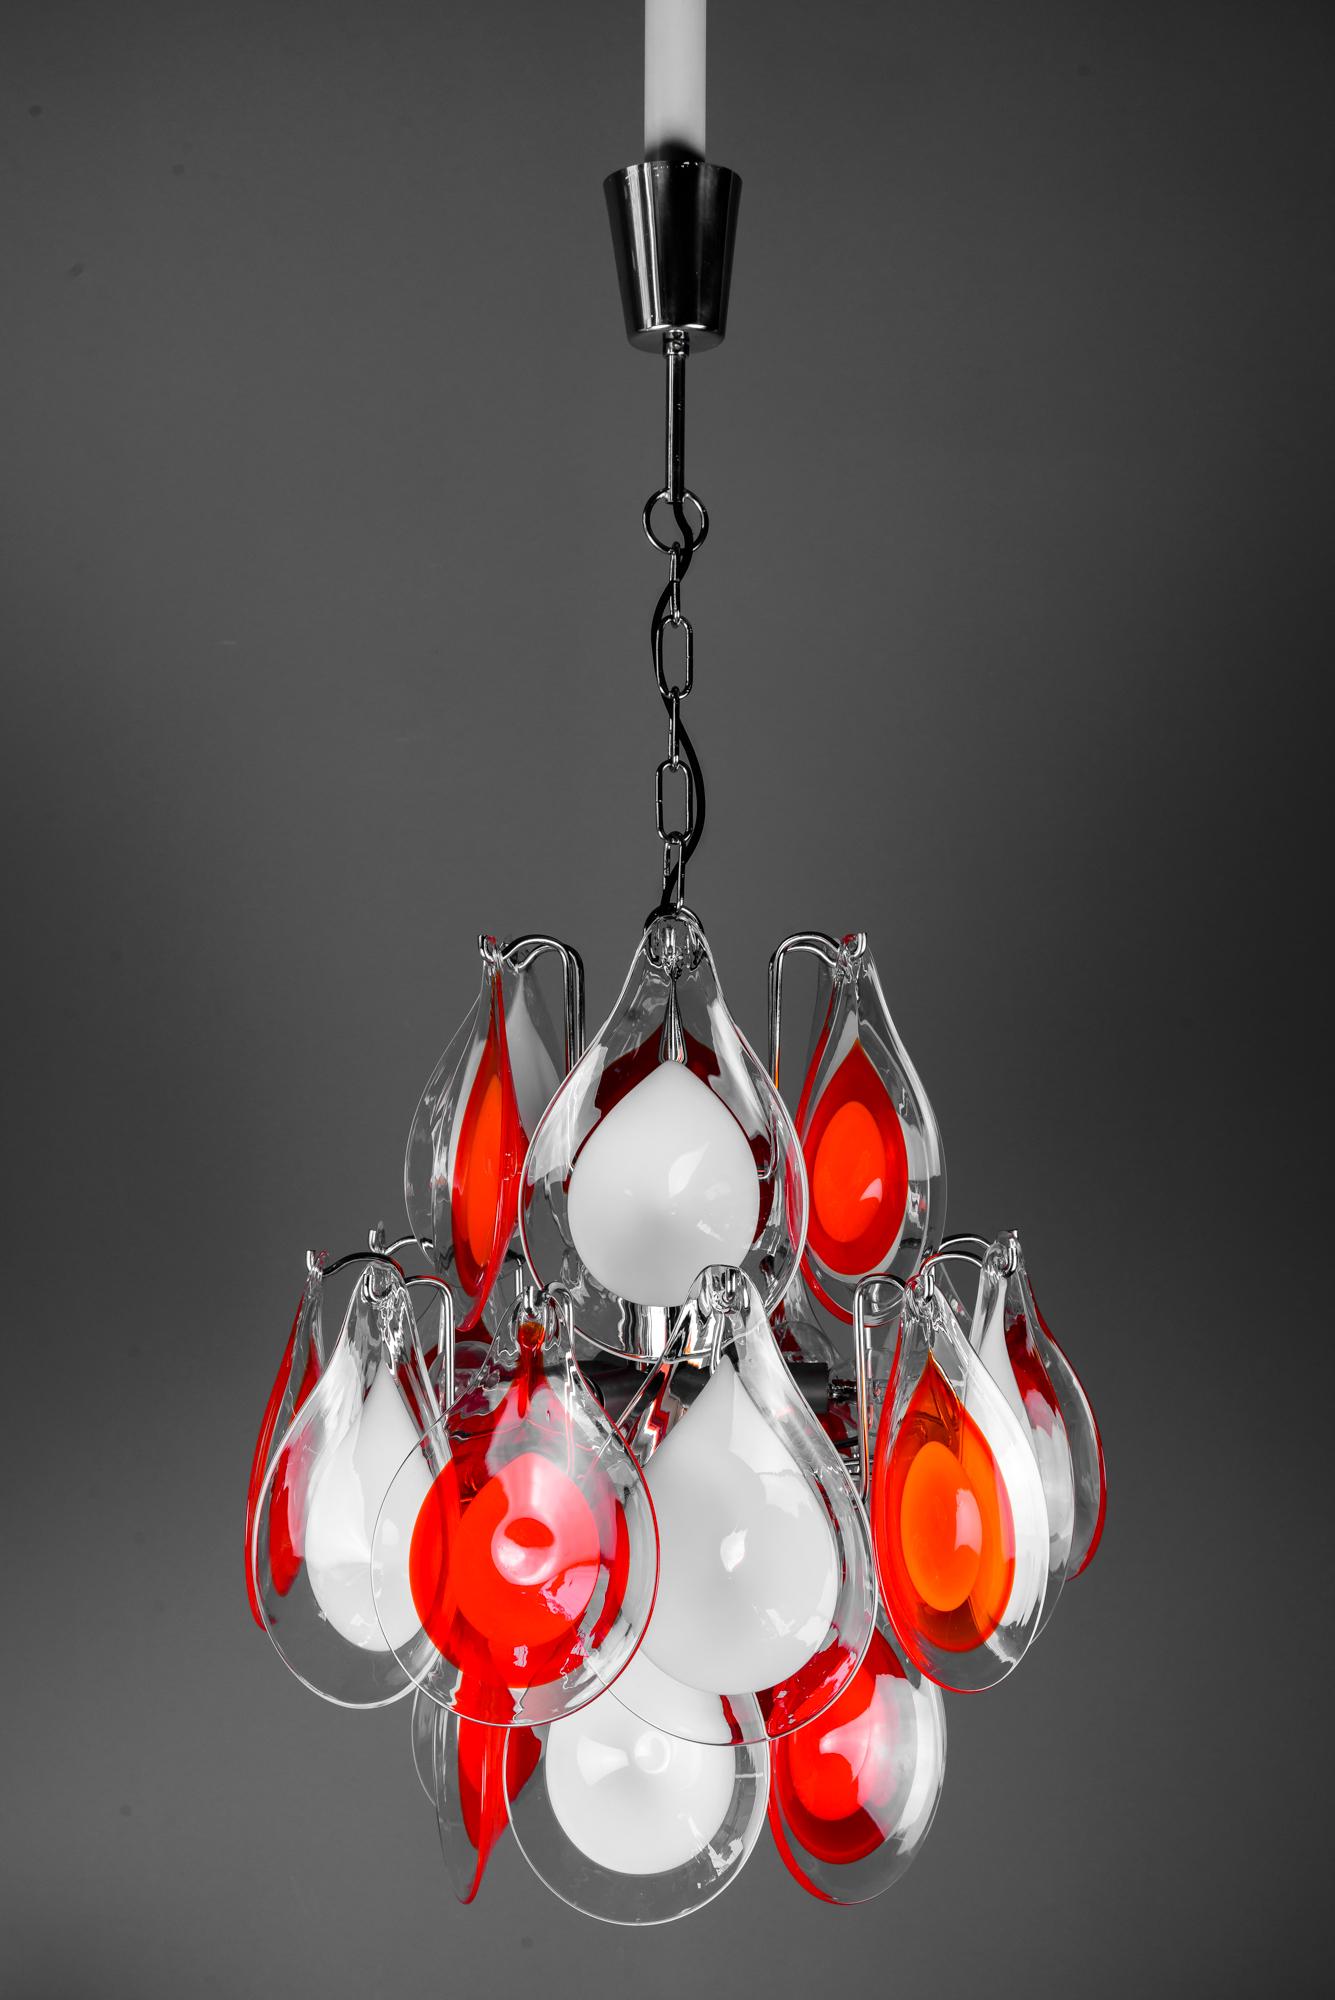 Glass chandelier, 2000s, style of Gino Vistosi
Original condition.